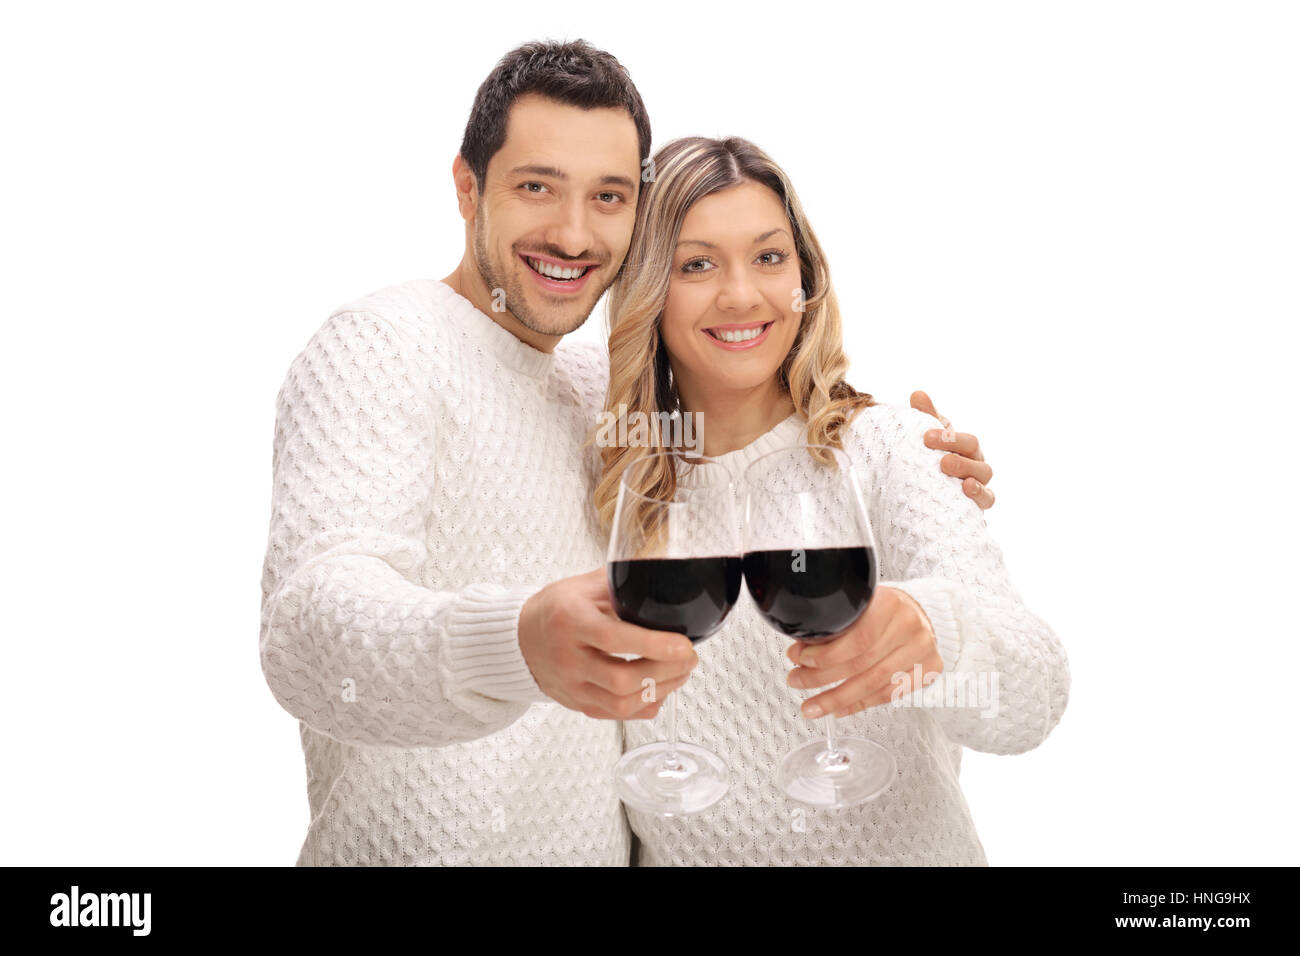 Joyful young couple making a toast with glasses of wine isolated on white background Stock Photo